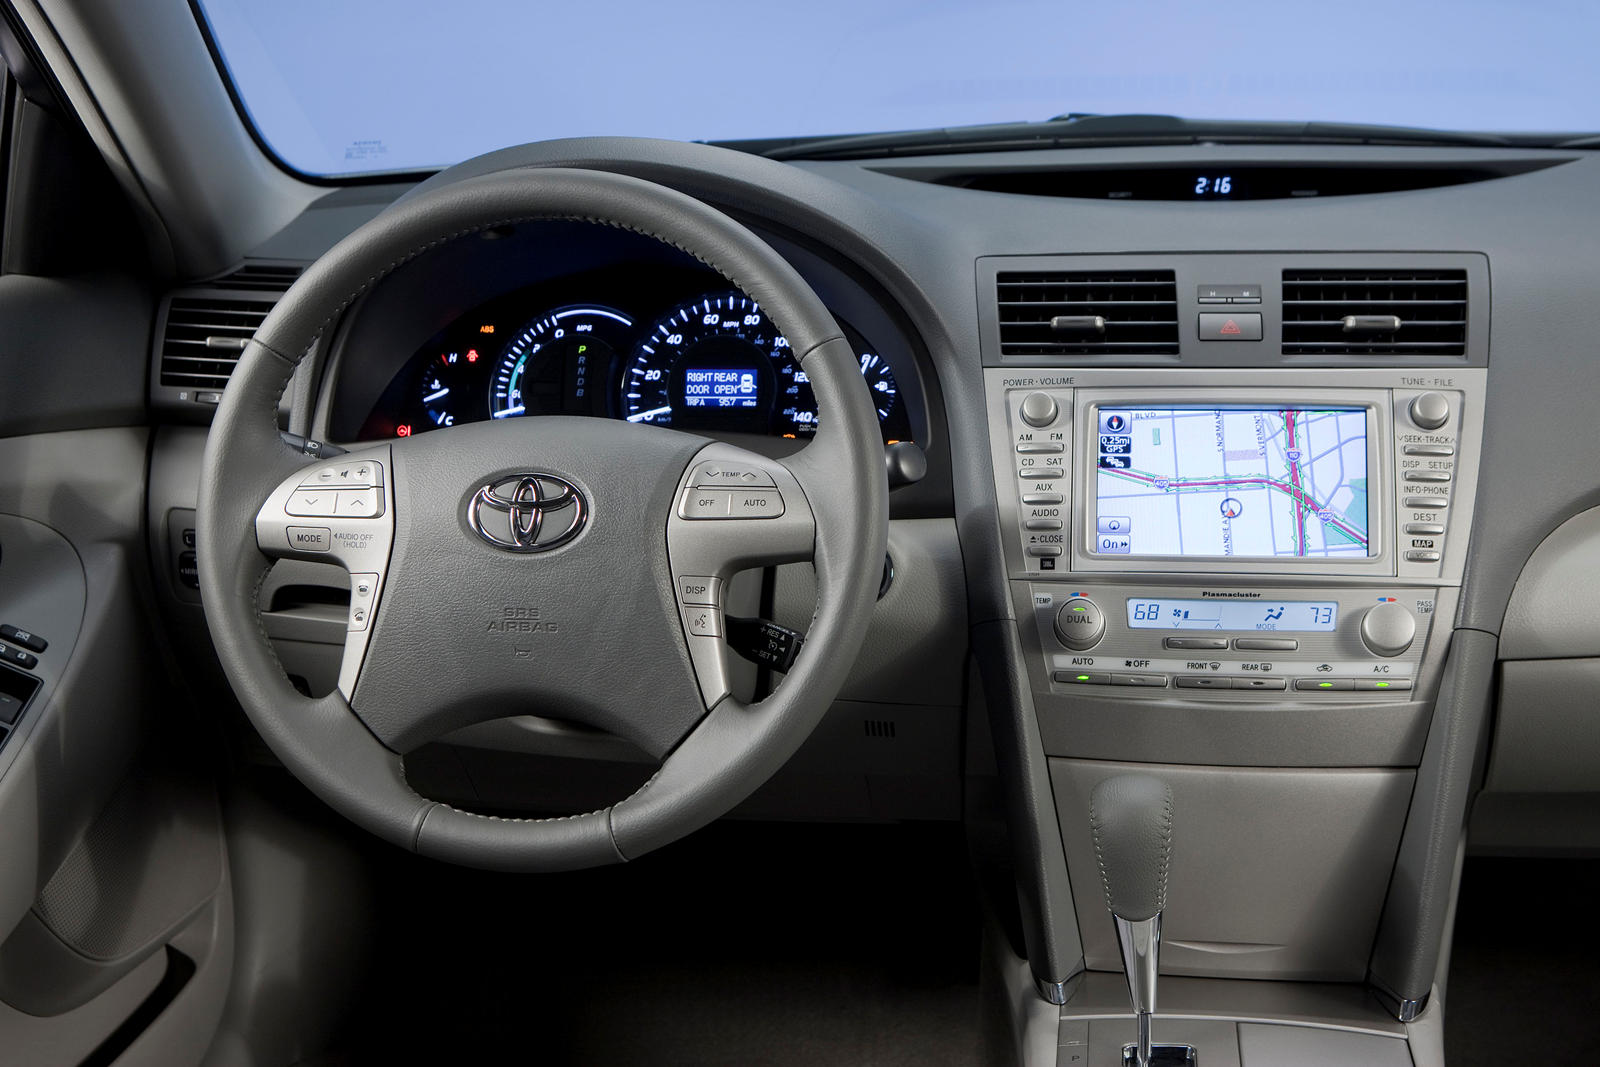 2011 Toyota Camry Hybrid Interior Photos | CarBuzz